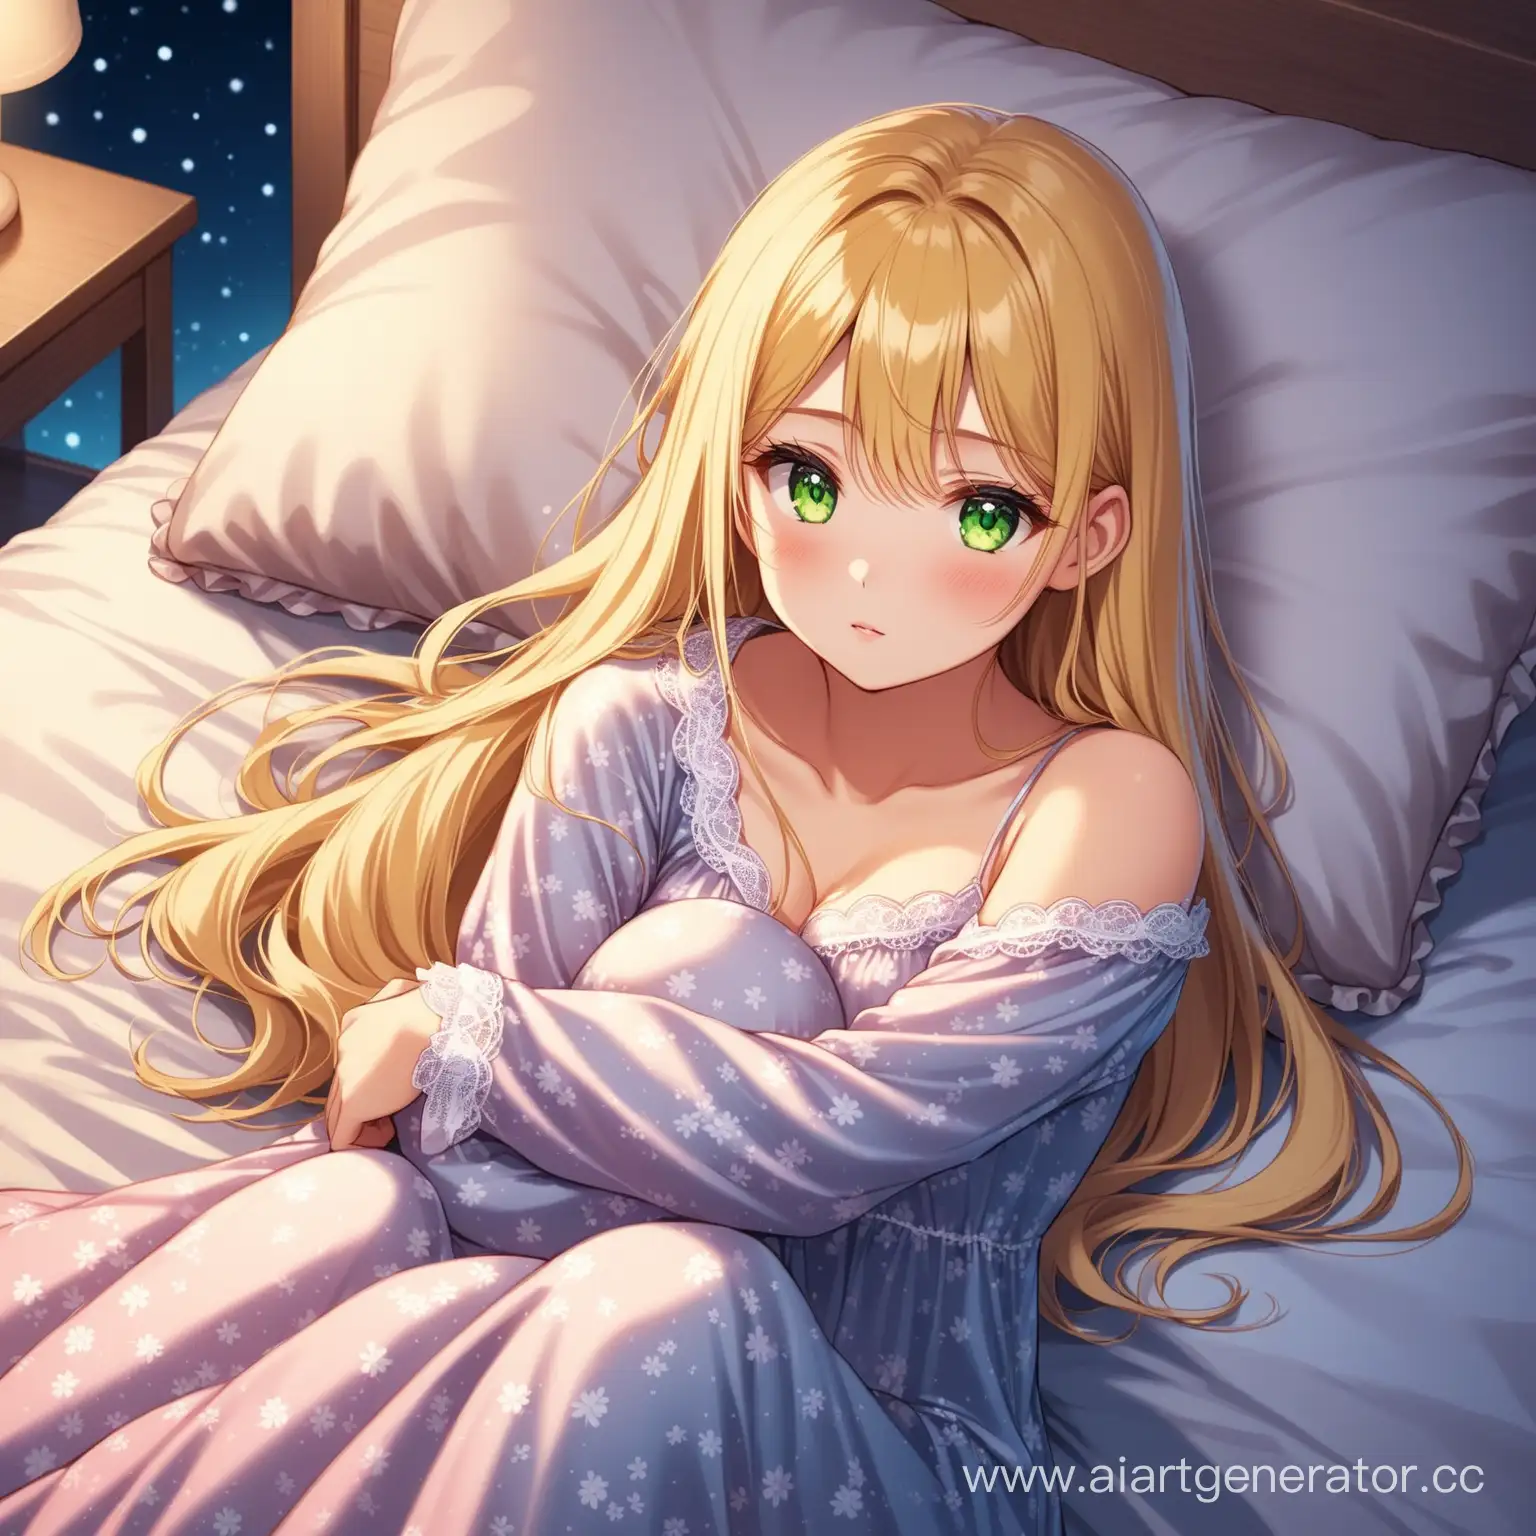 Blonde-Girl-in-Elegant-Nightgown-Embracing-Pillow-in-Moonlit-Bedroom